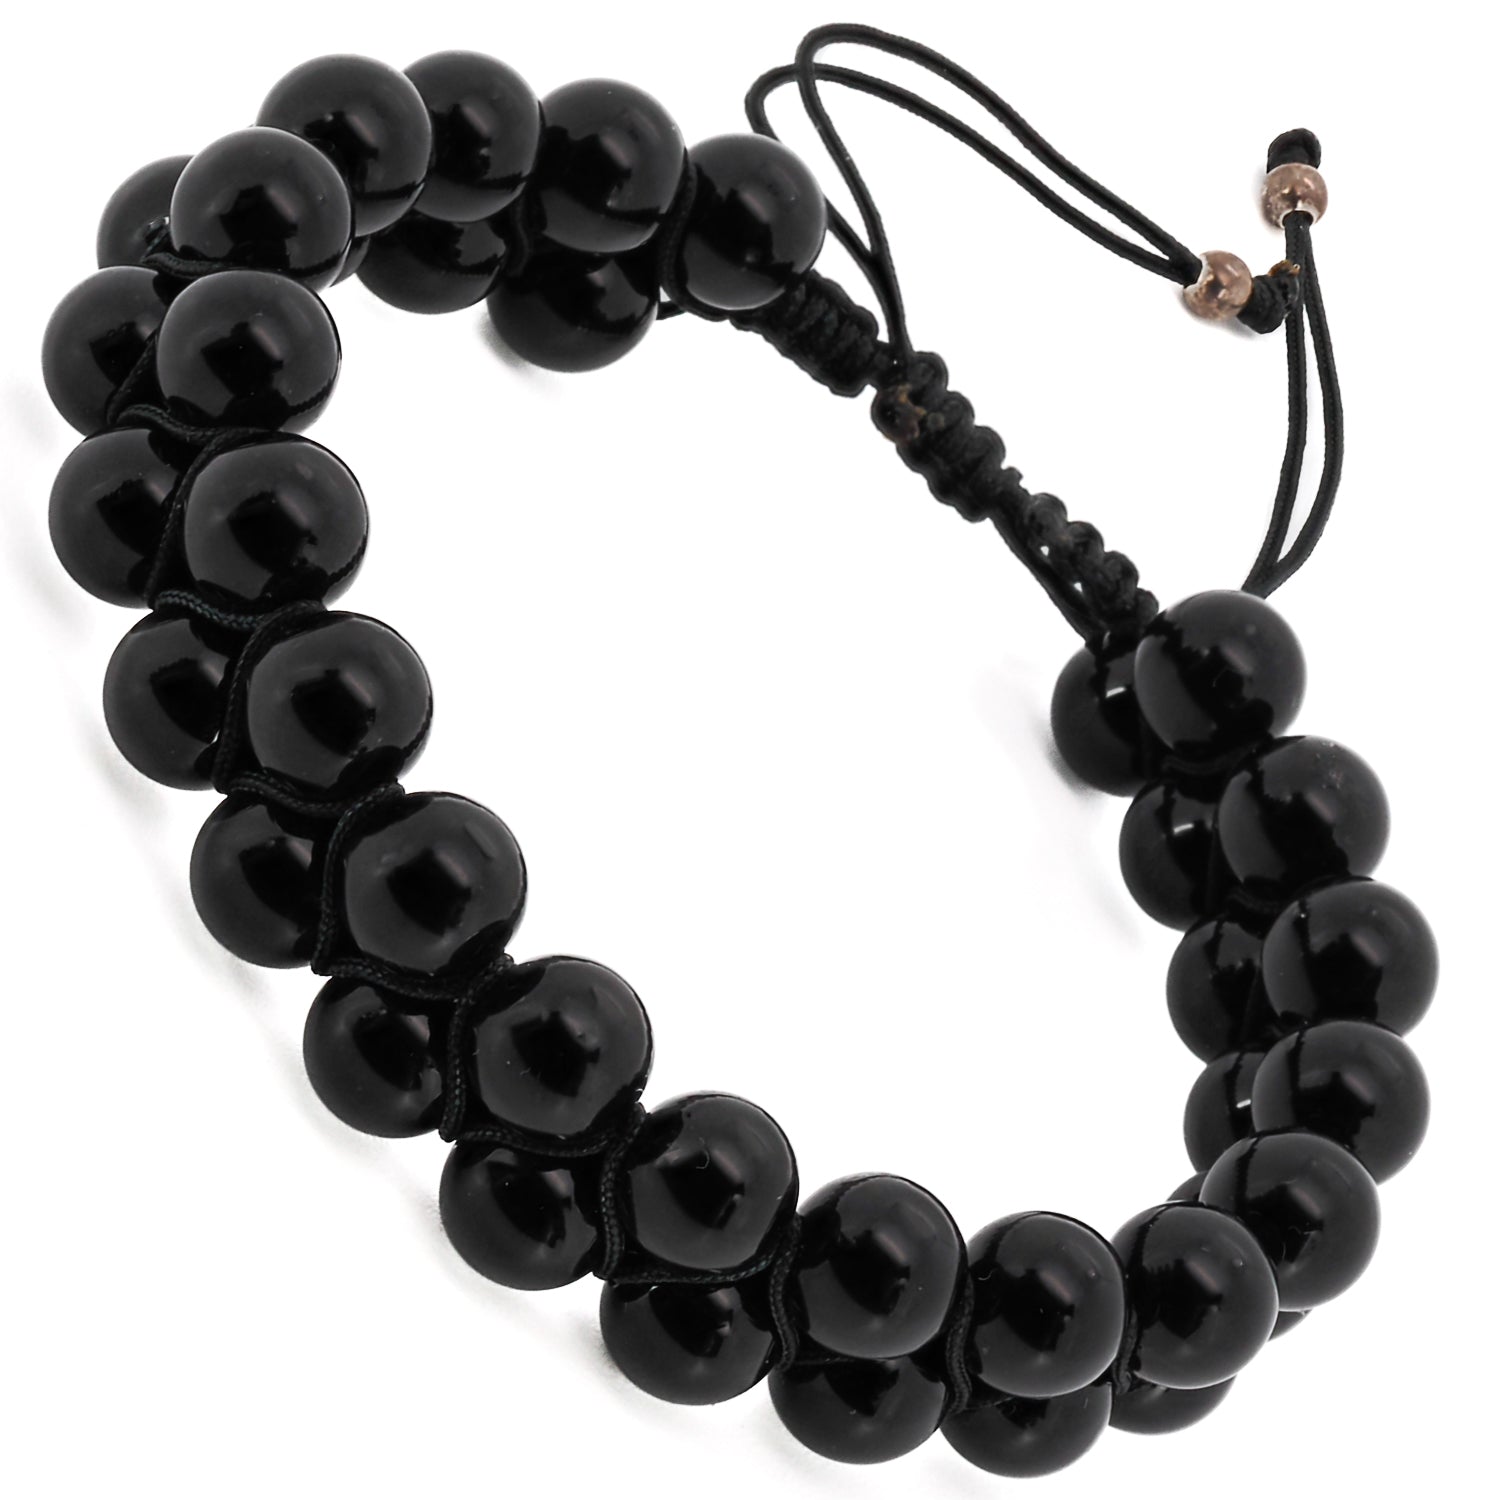 Black Onyx Self Control Bracelet for Men and Women